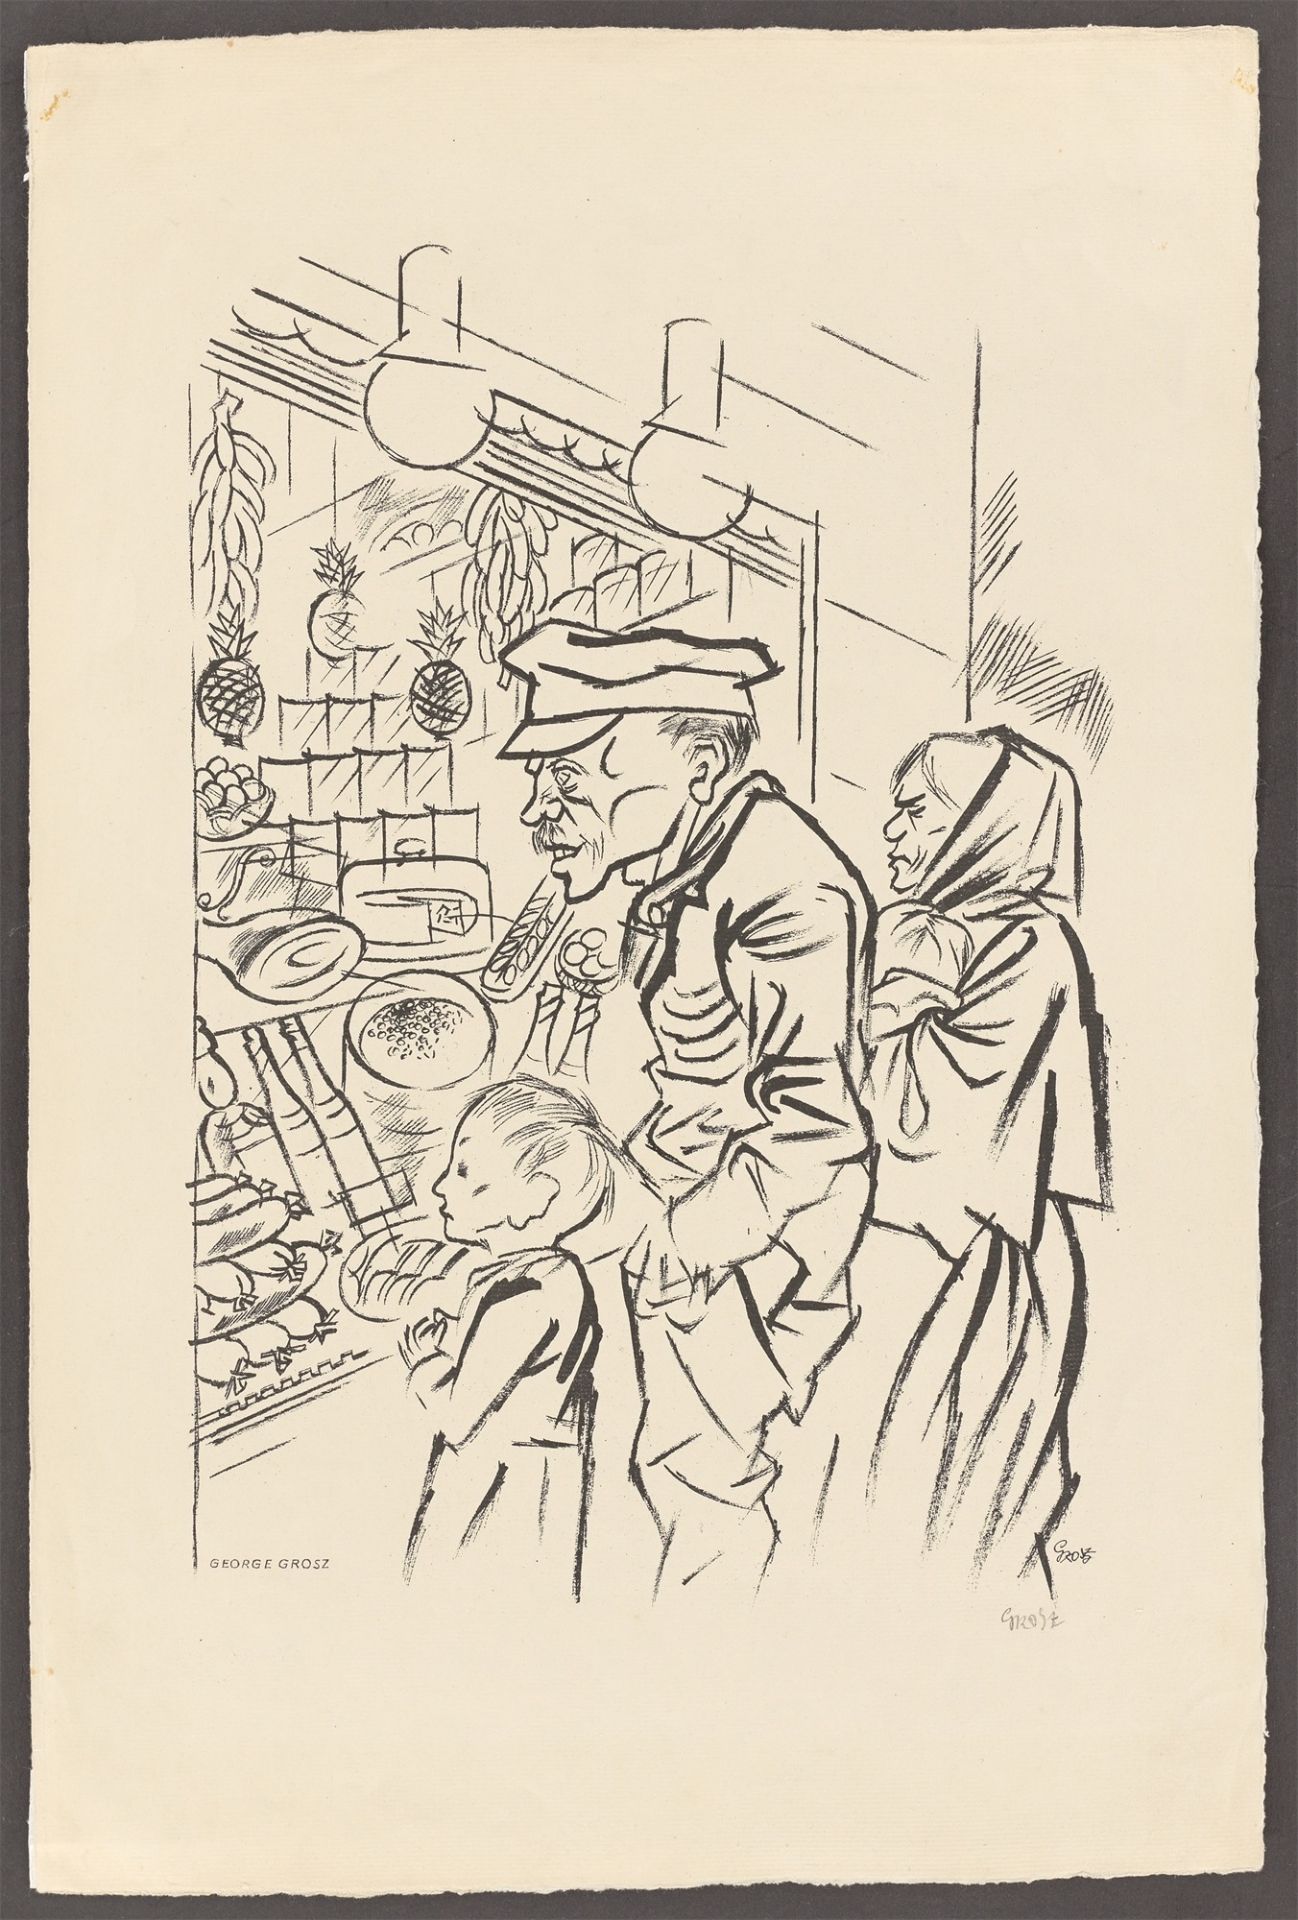 George Grosz. ”Hunger”. 1924 - Image 2 of 3